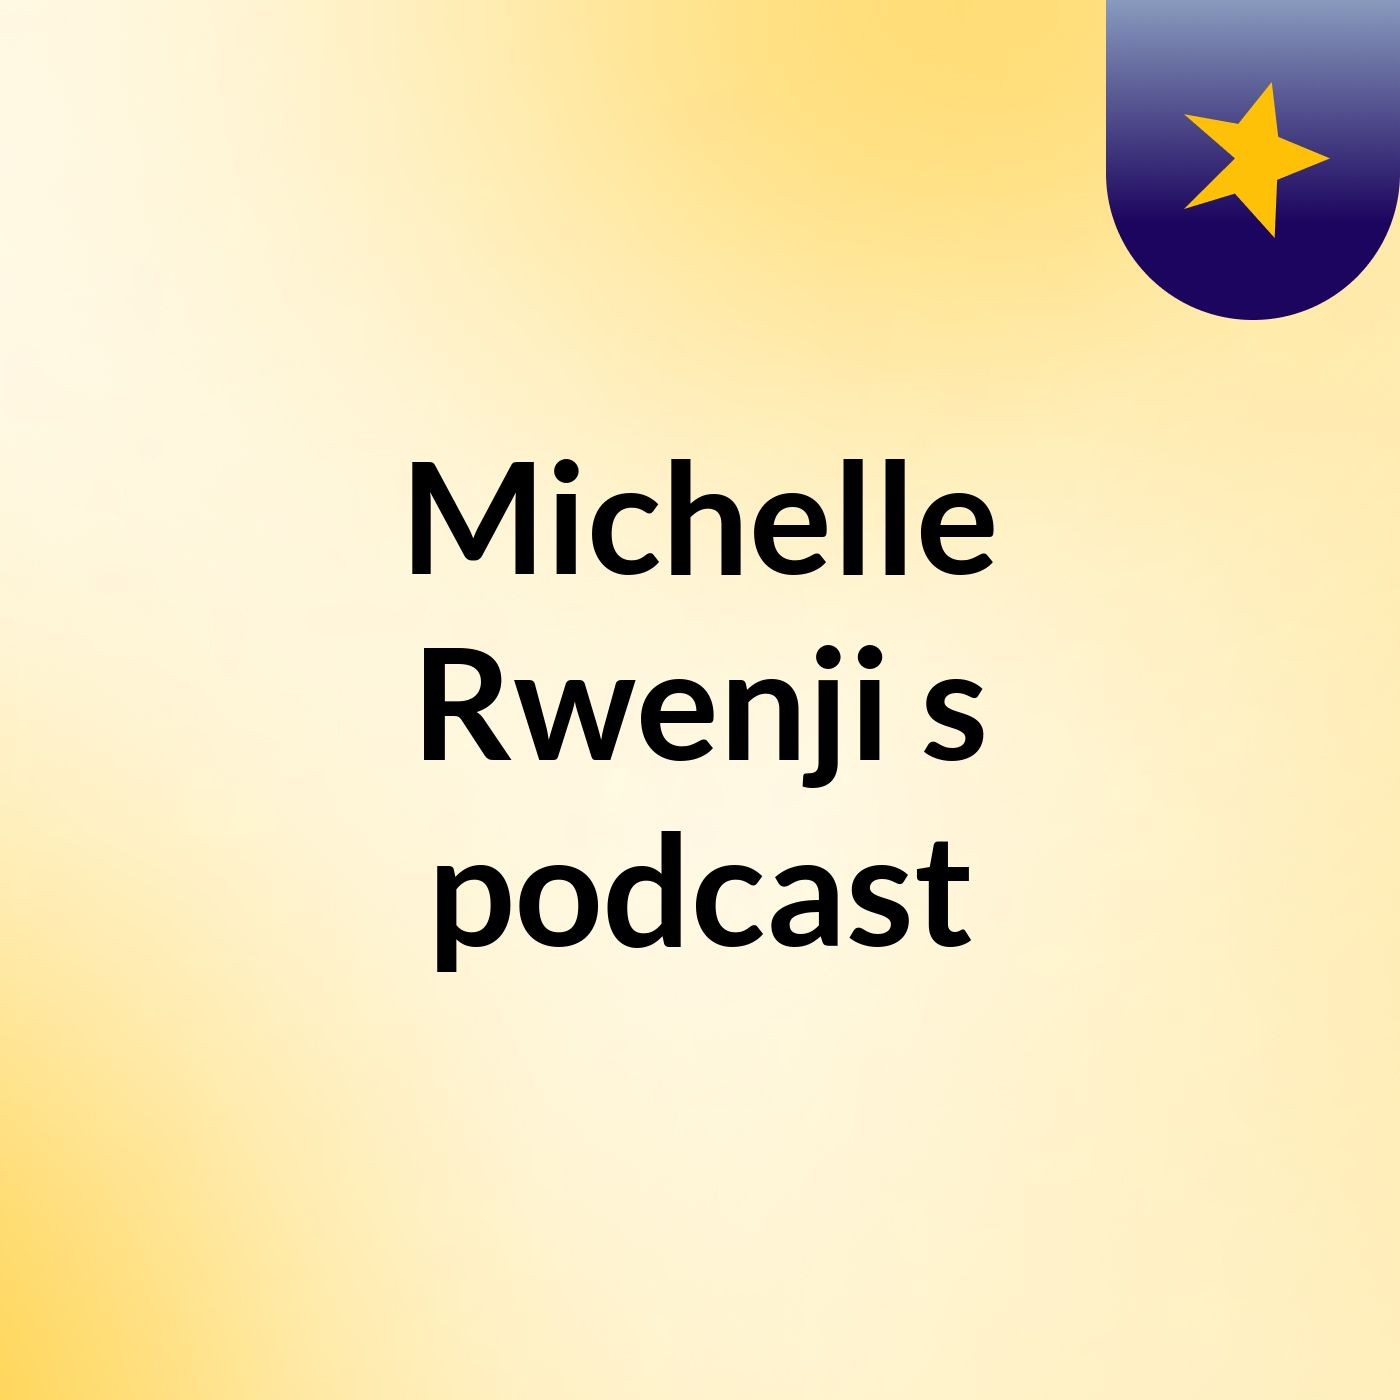 Michelle Rwenji's podcast